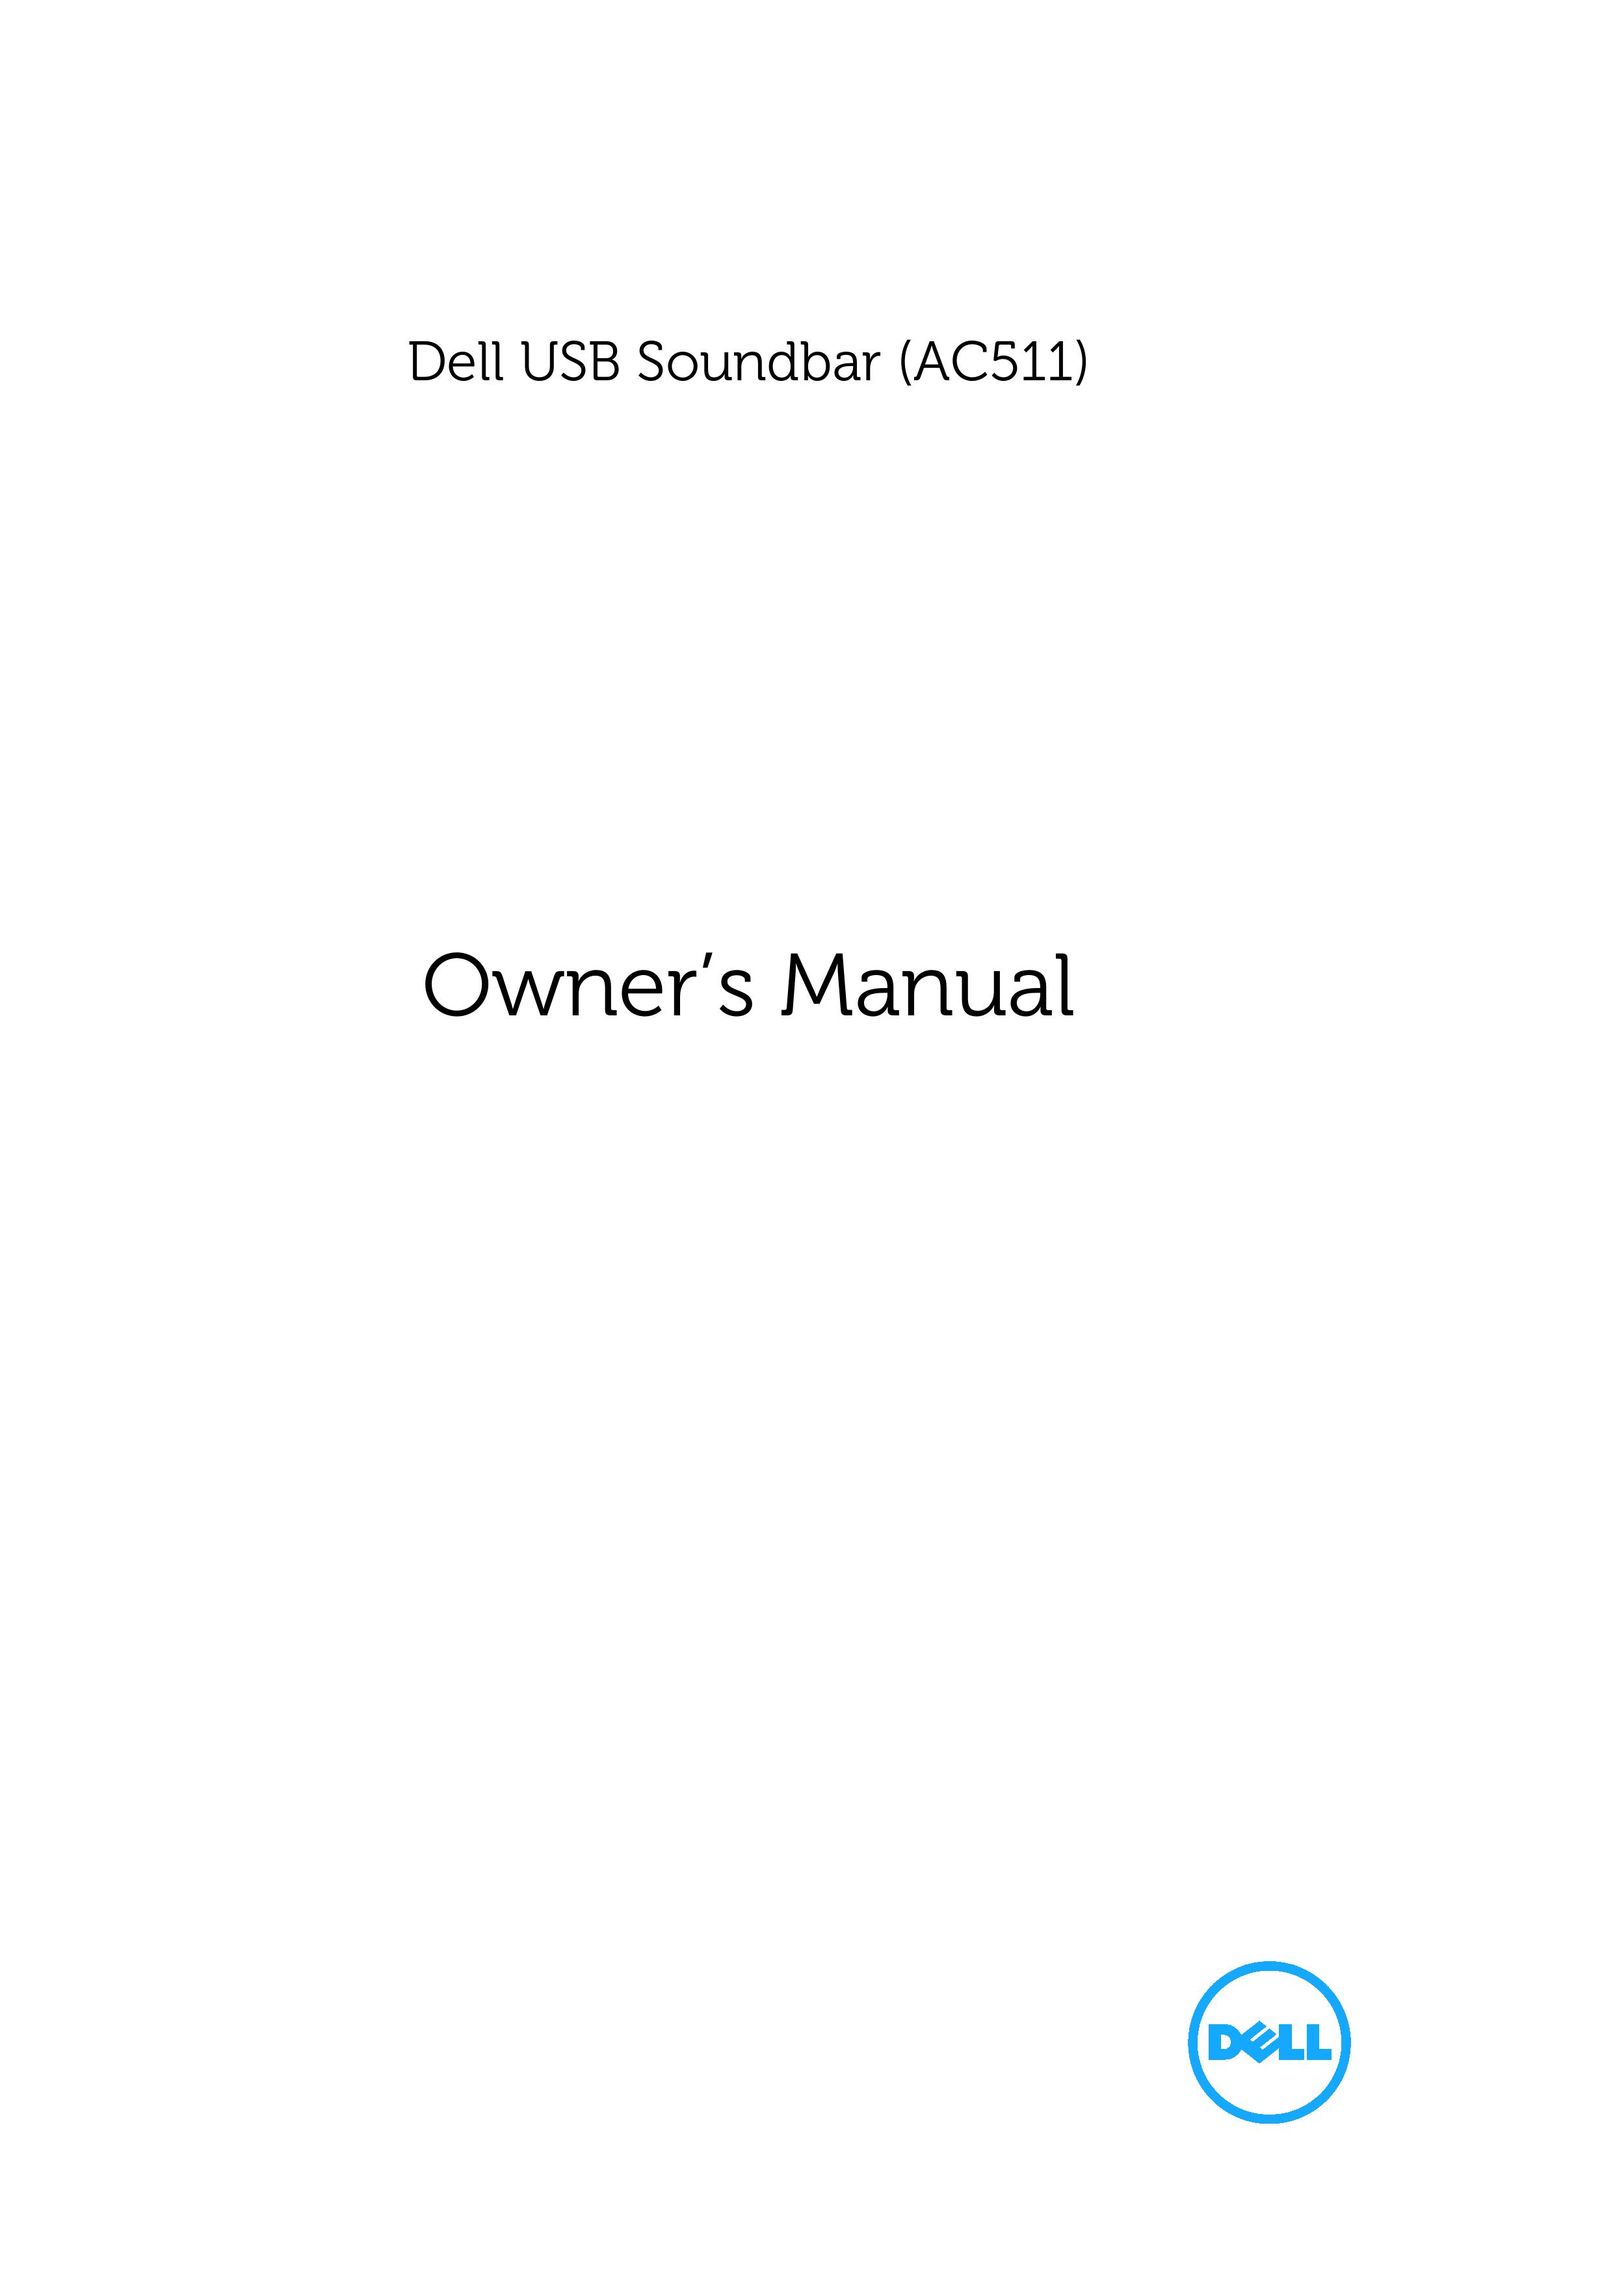 Dell AC511 Webcam User Manual